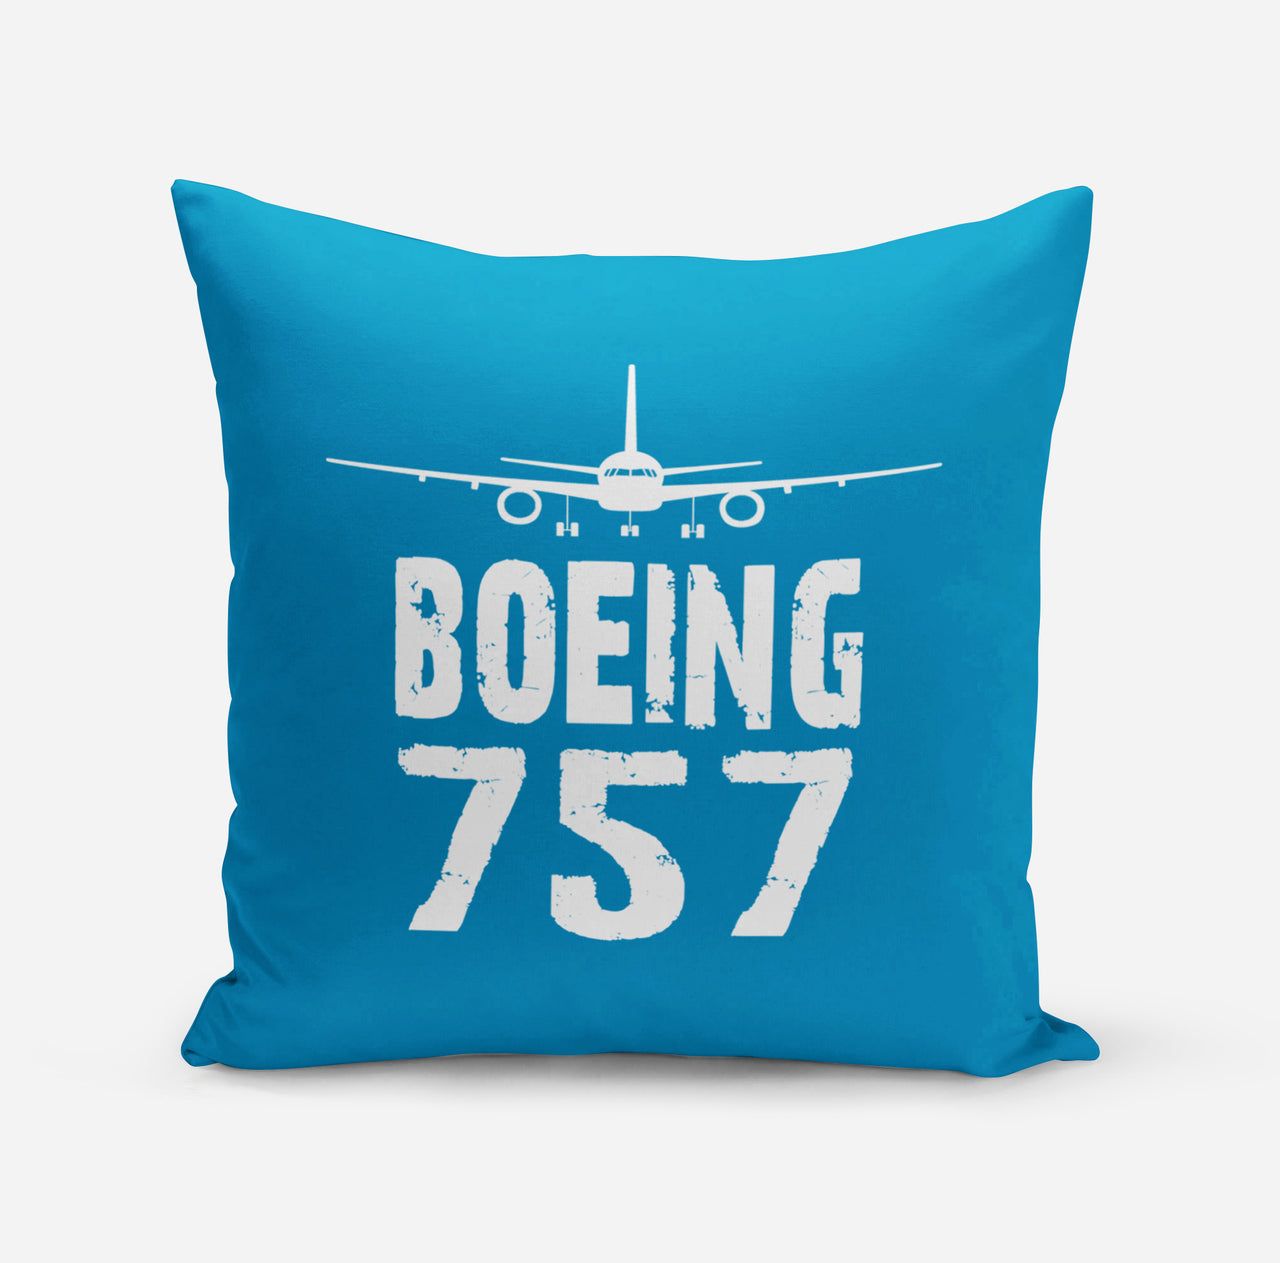 Boeing 757 & Plane Designed Pillows